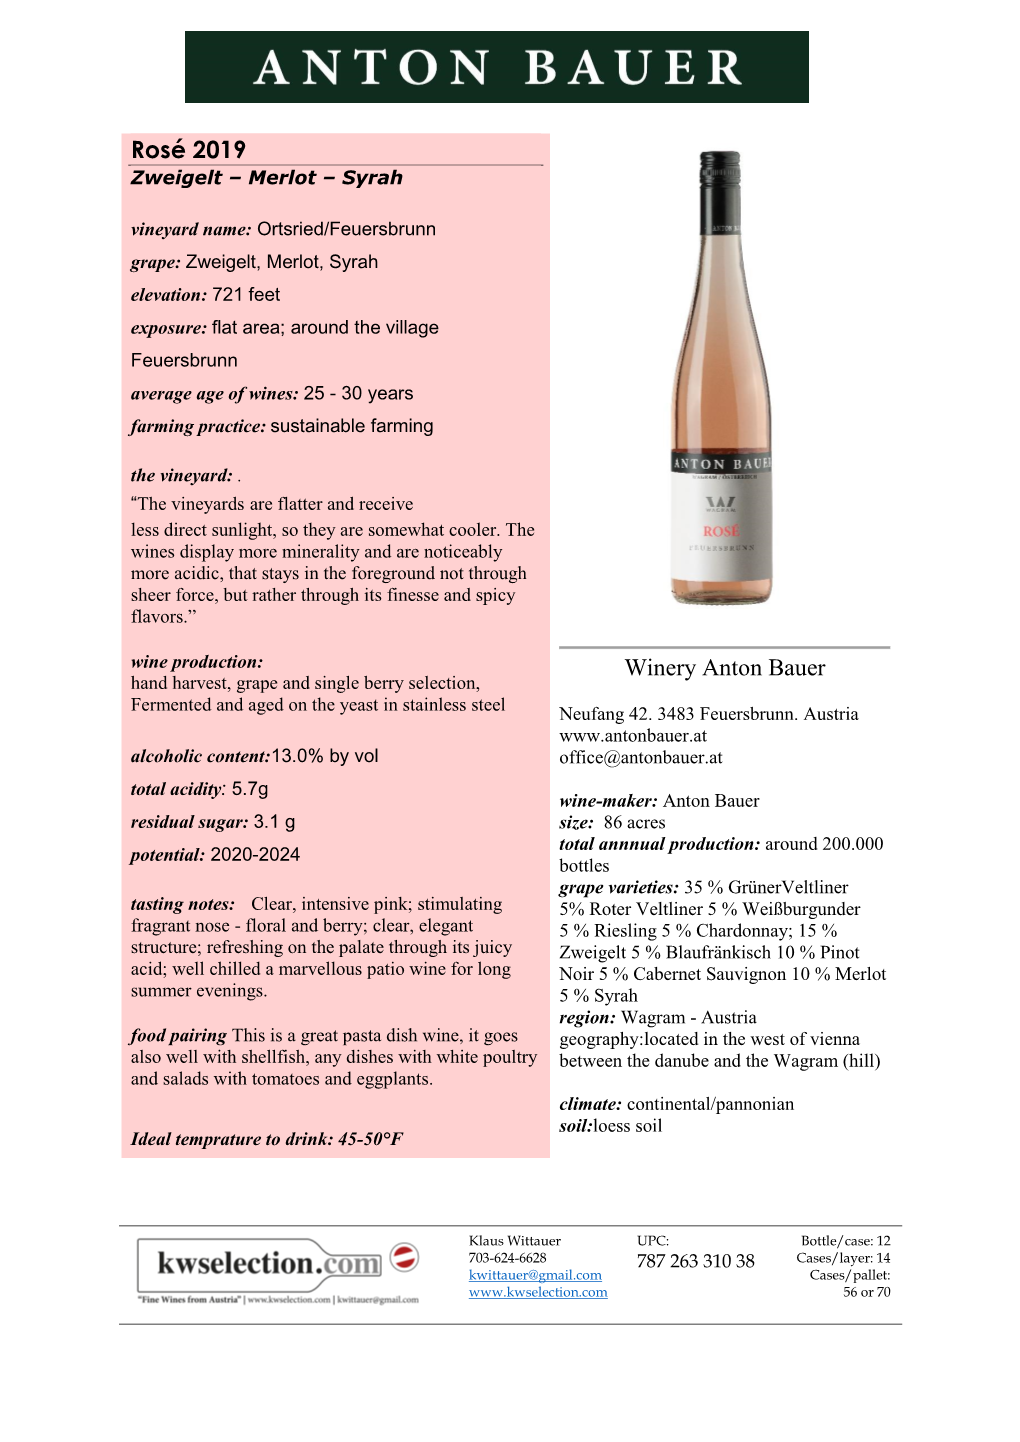 Rosé 2019 Winery Anton Bauer